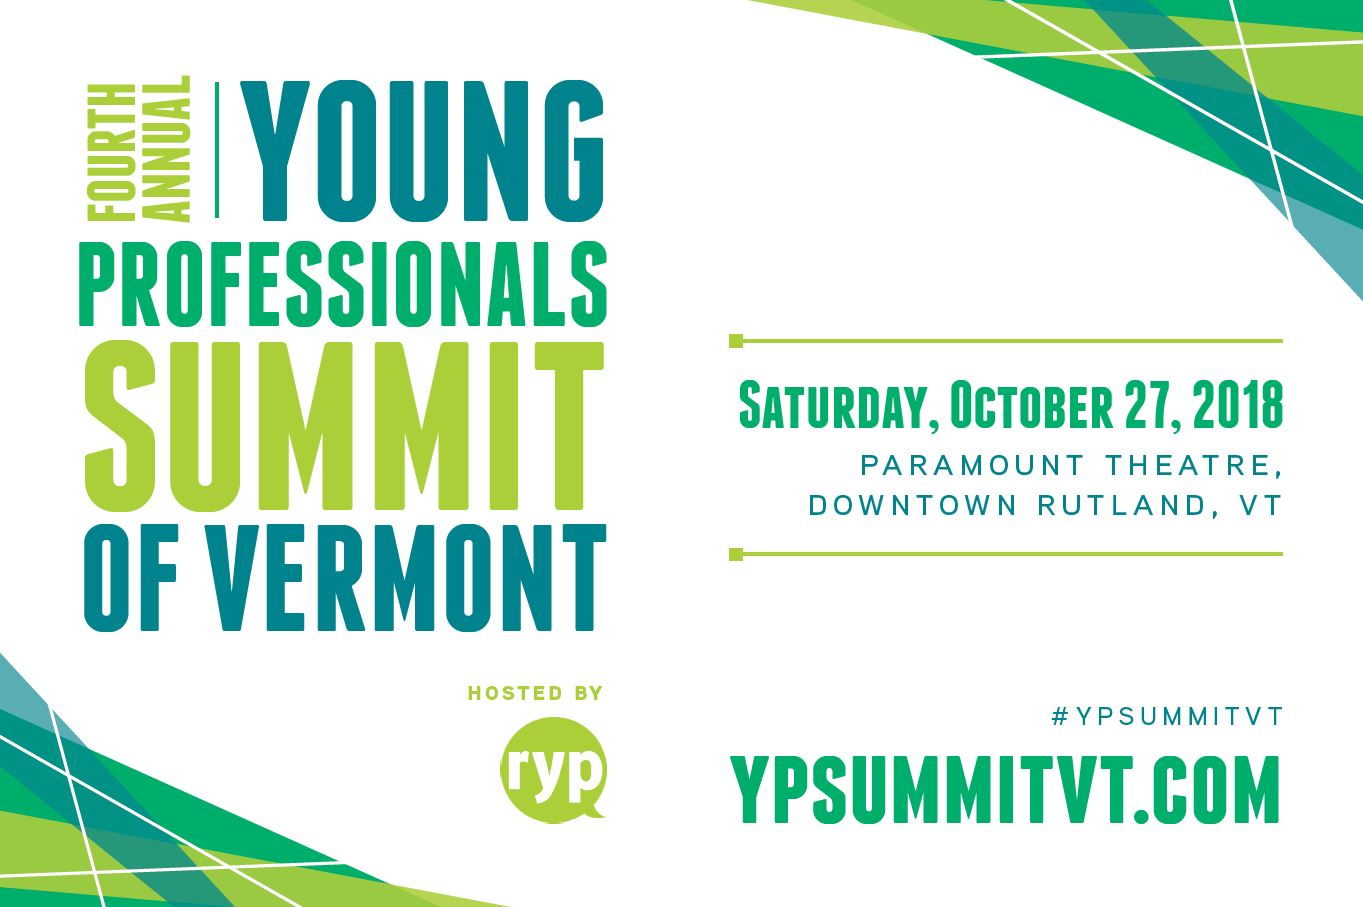 YP Summit